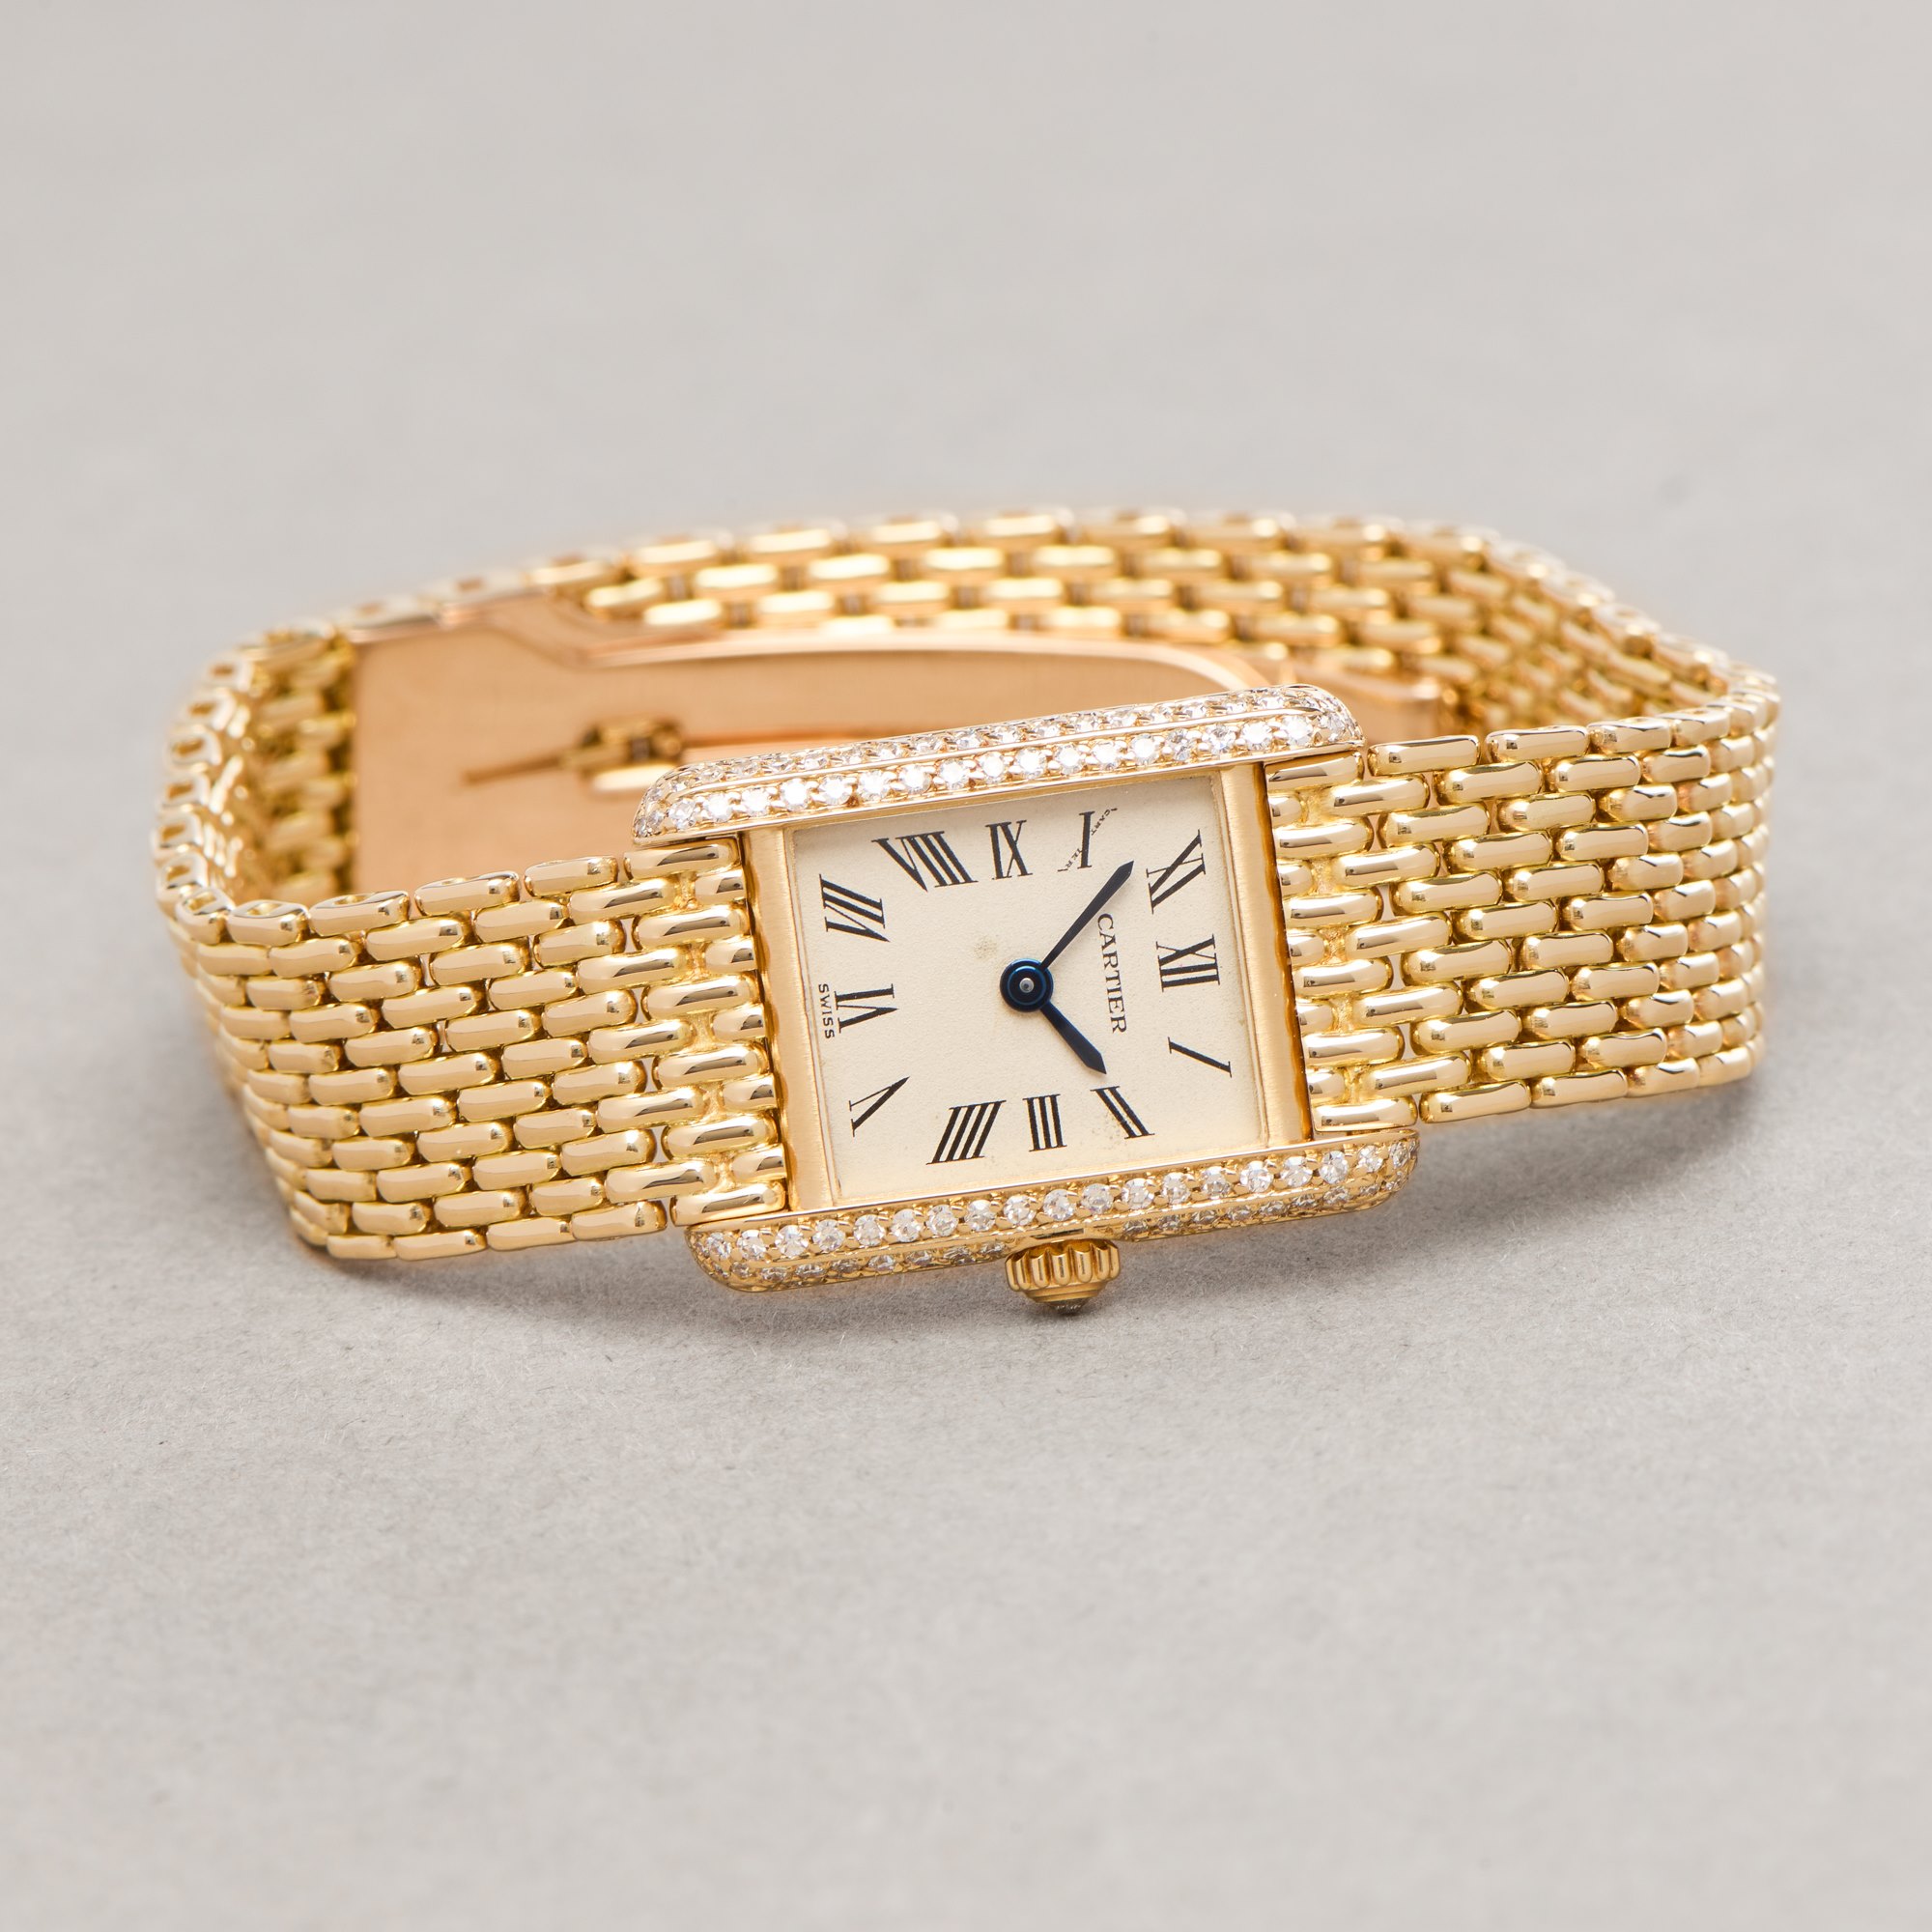 Cartier Tank Diamond 18K Yellow Gold Watch 82260177 or 1141 - Image 7 of 10